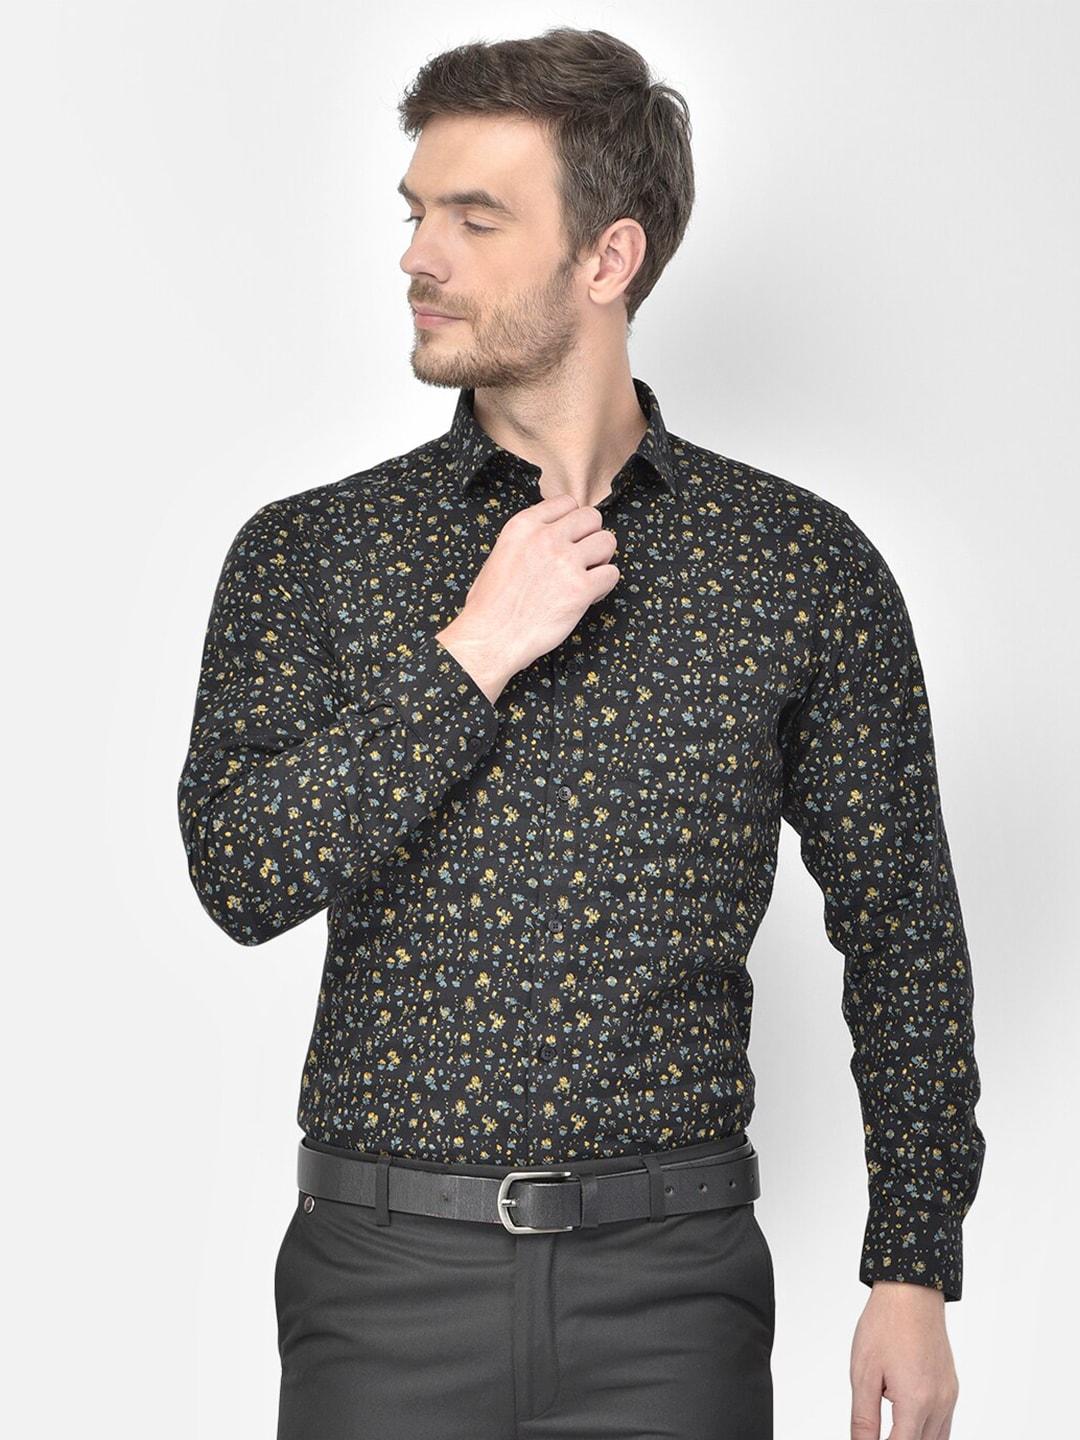 canary-london-men-black-floral-printed-smart-slim-fit-semiformal-shirt